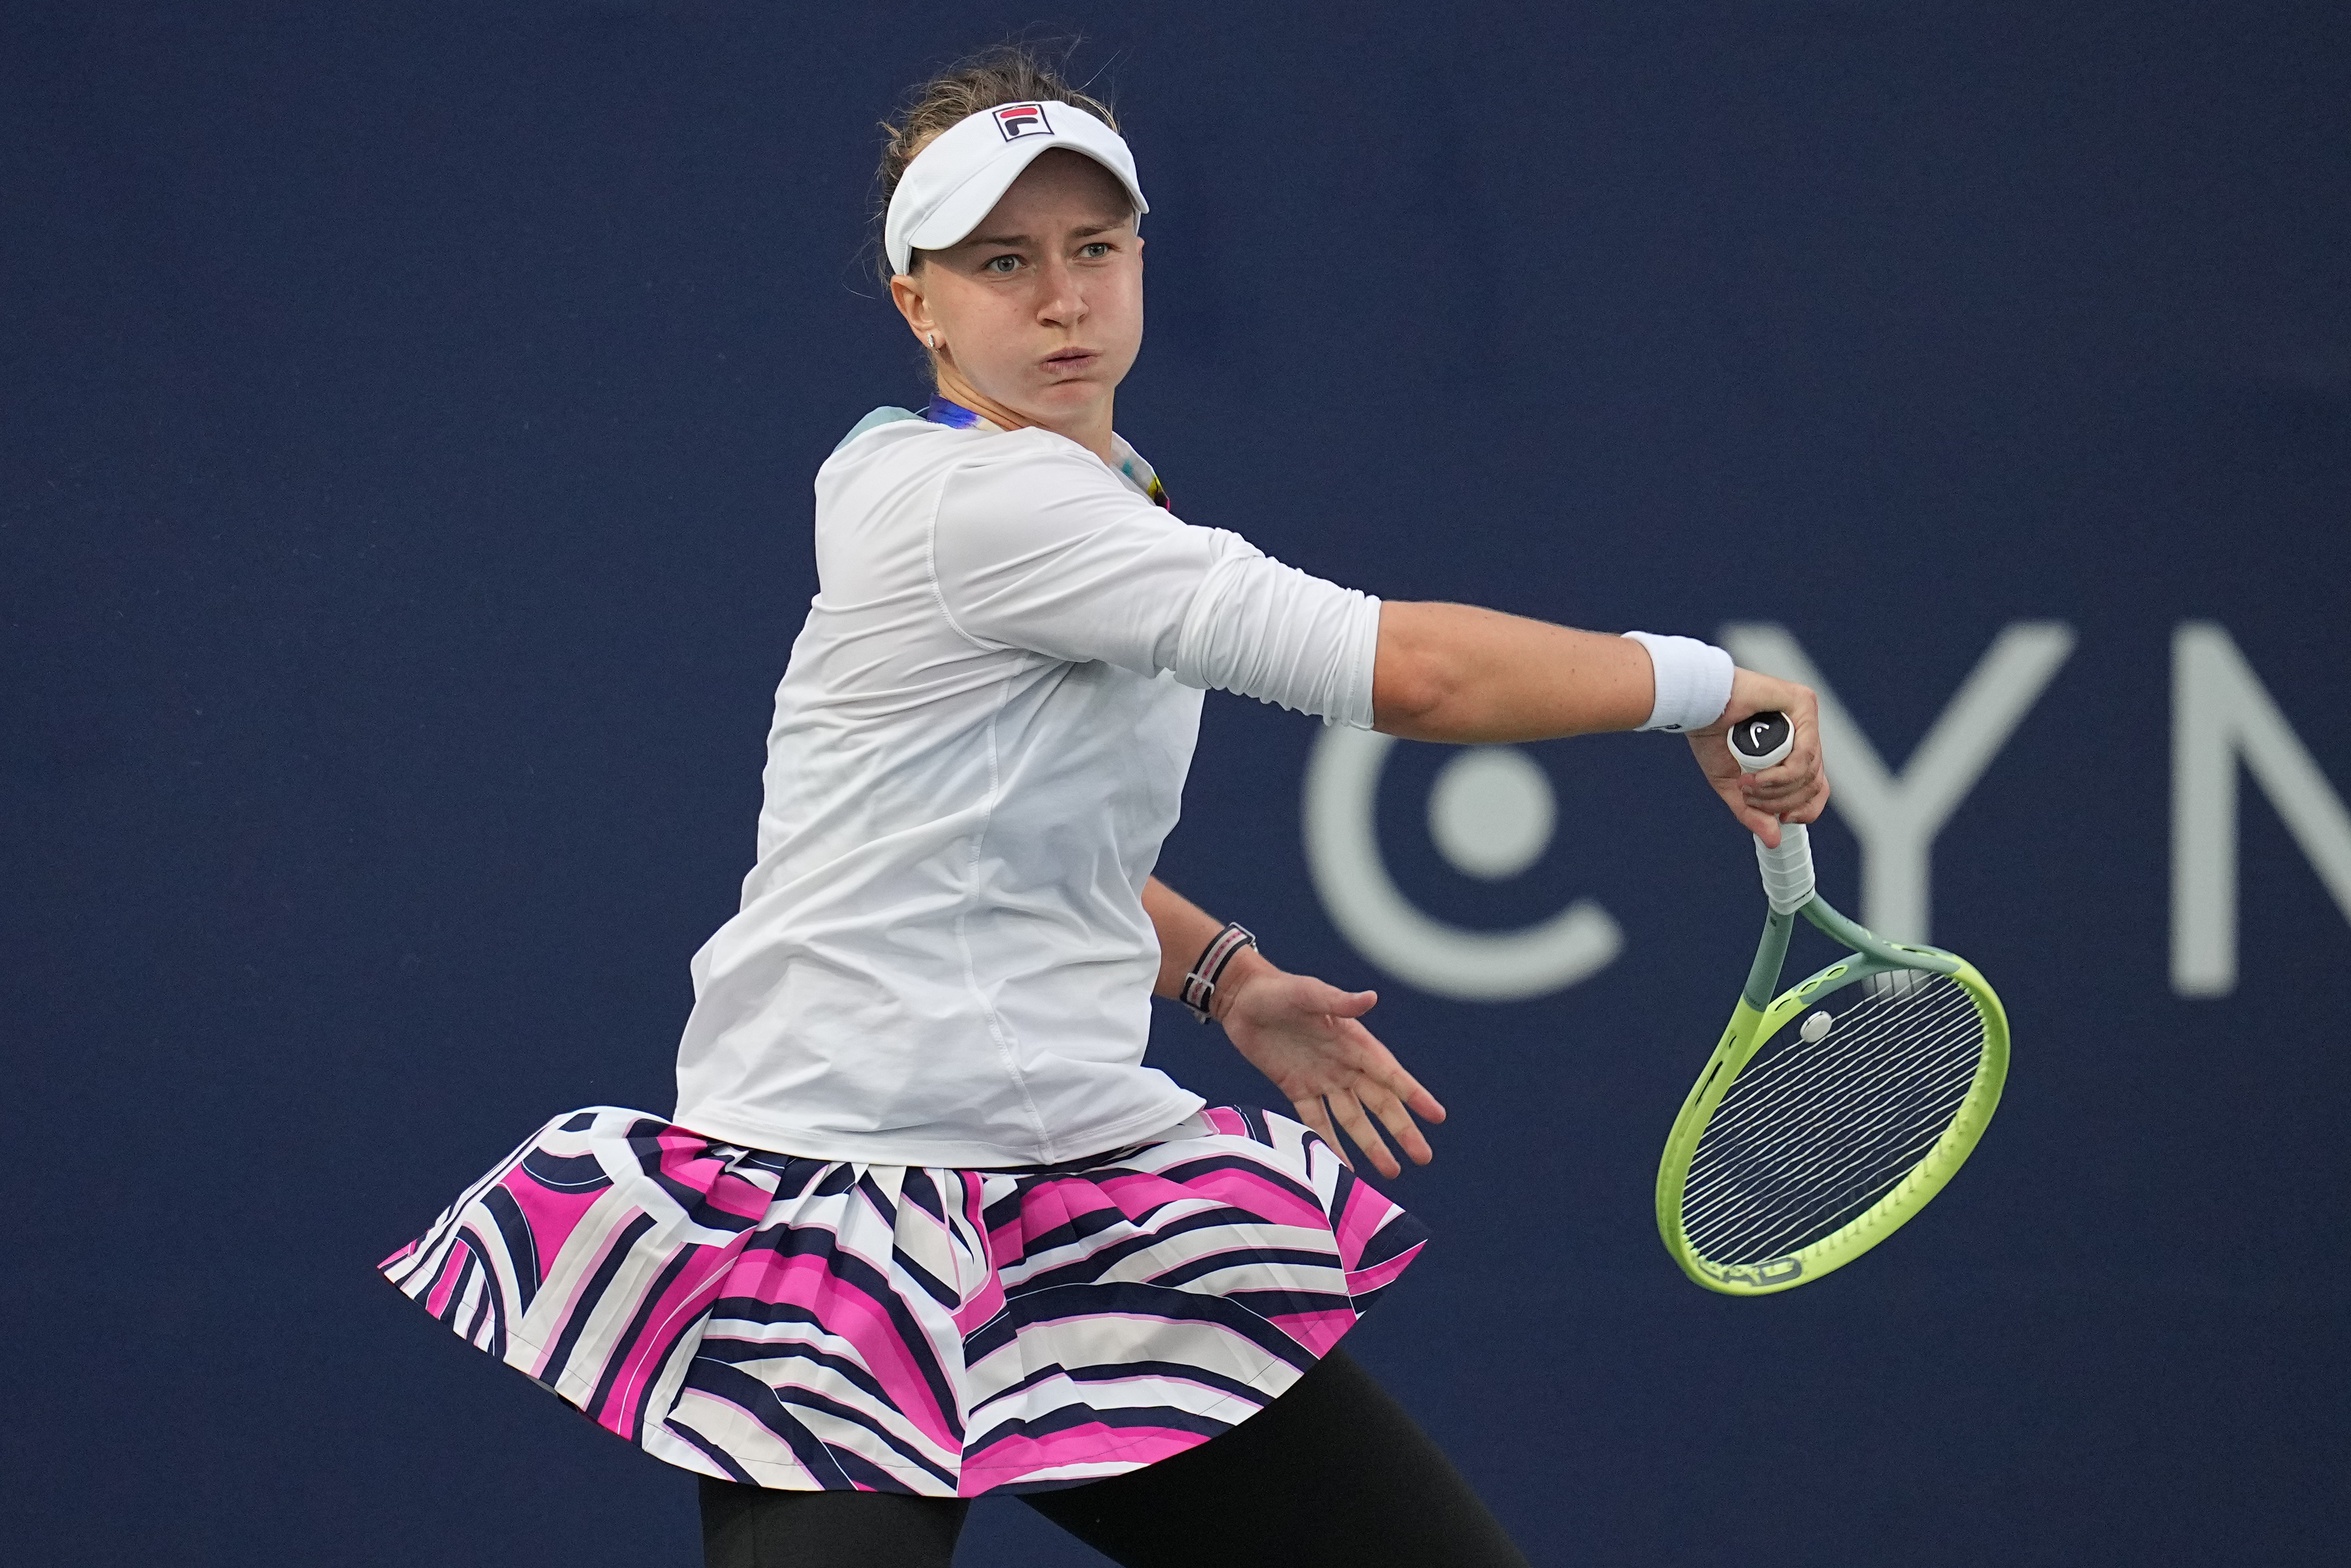 Barbora Krejcikova in action ahead of the WTA Zhengzhou Open.